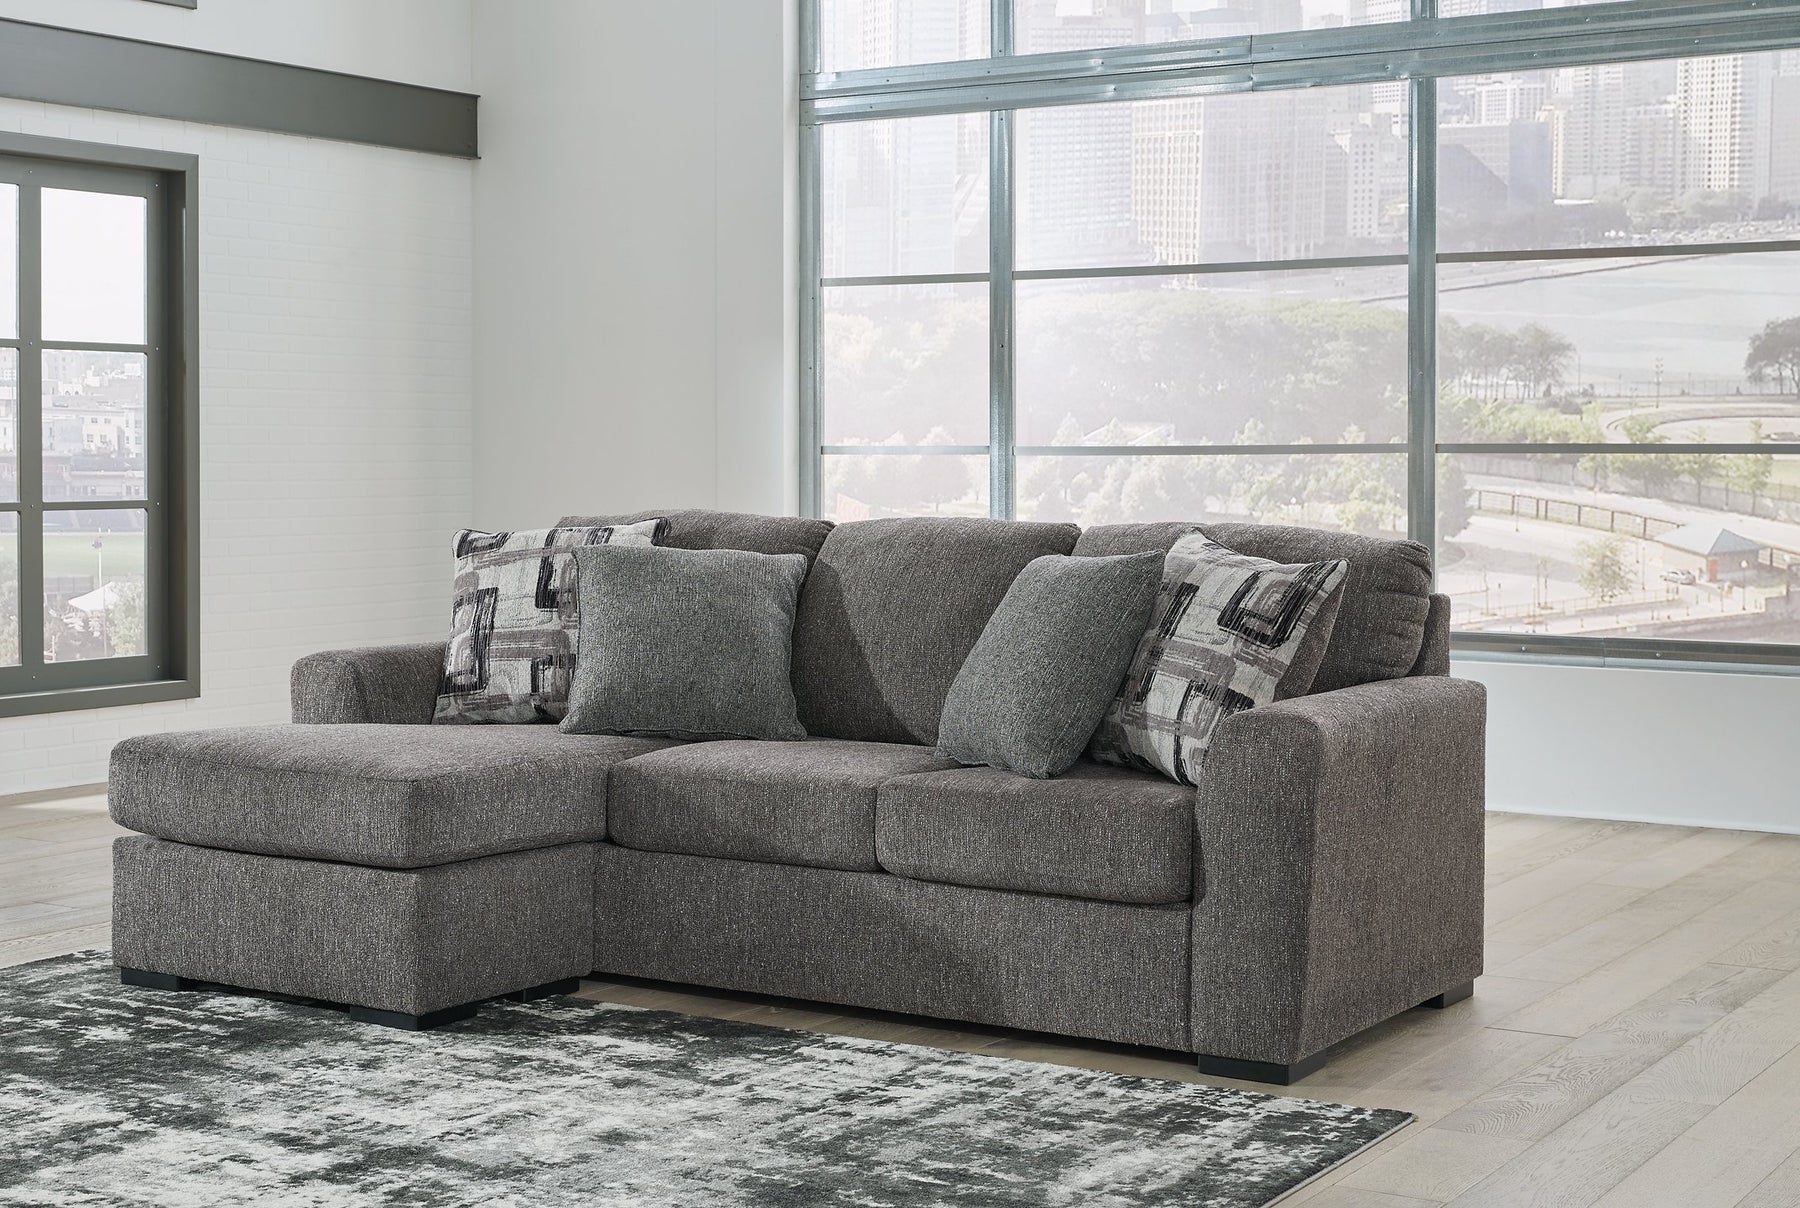 Gardiner Living Room Set - Half Price Furniture